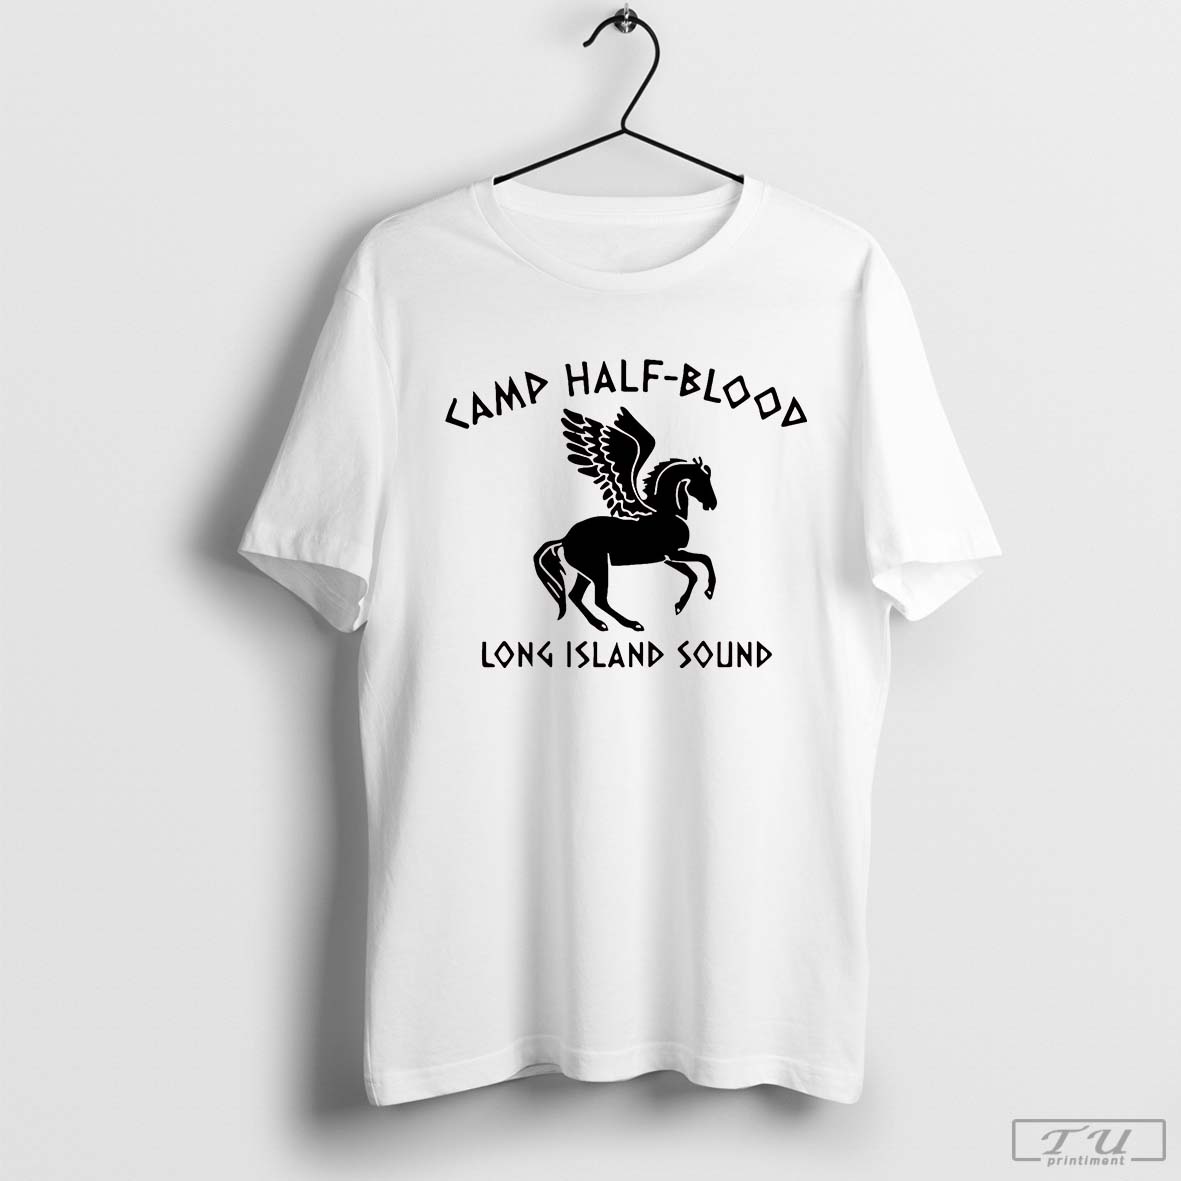 Camp Jupiter Camp Half-blood Chronicles Branches T-shirt 